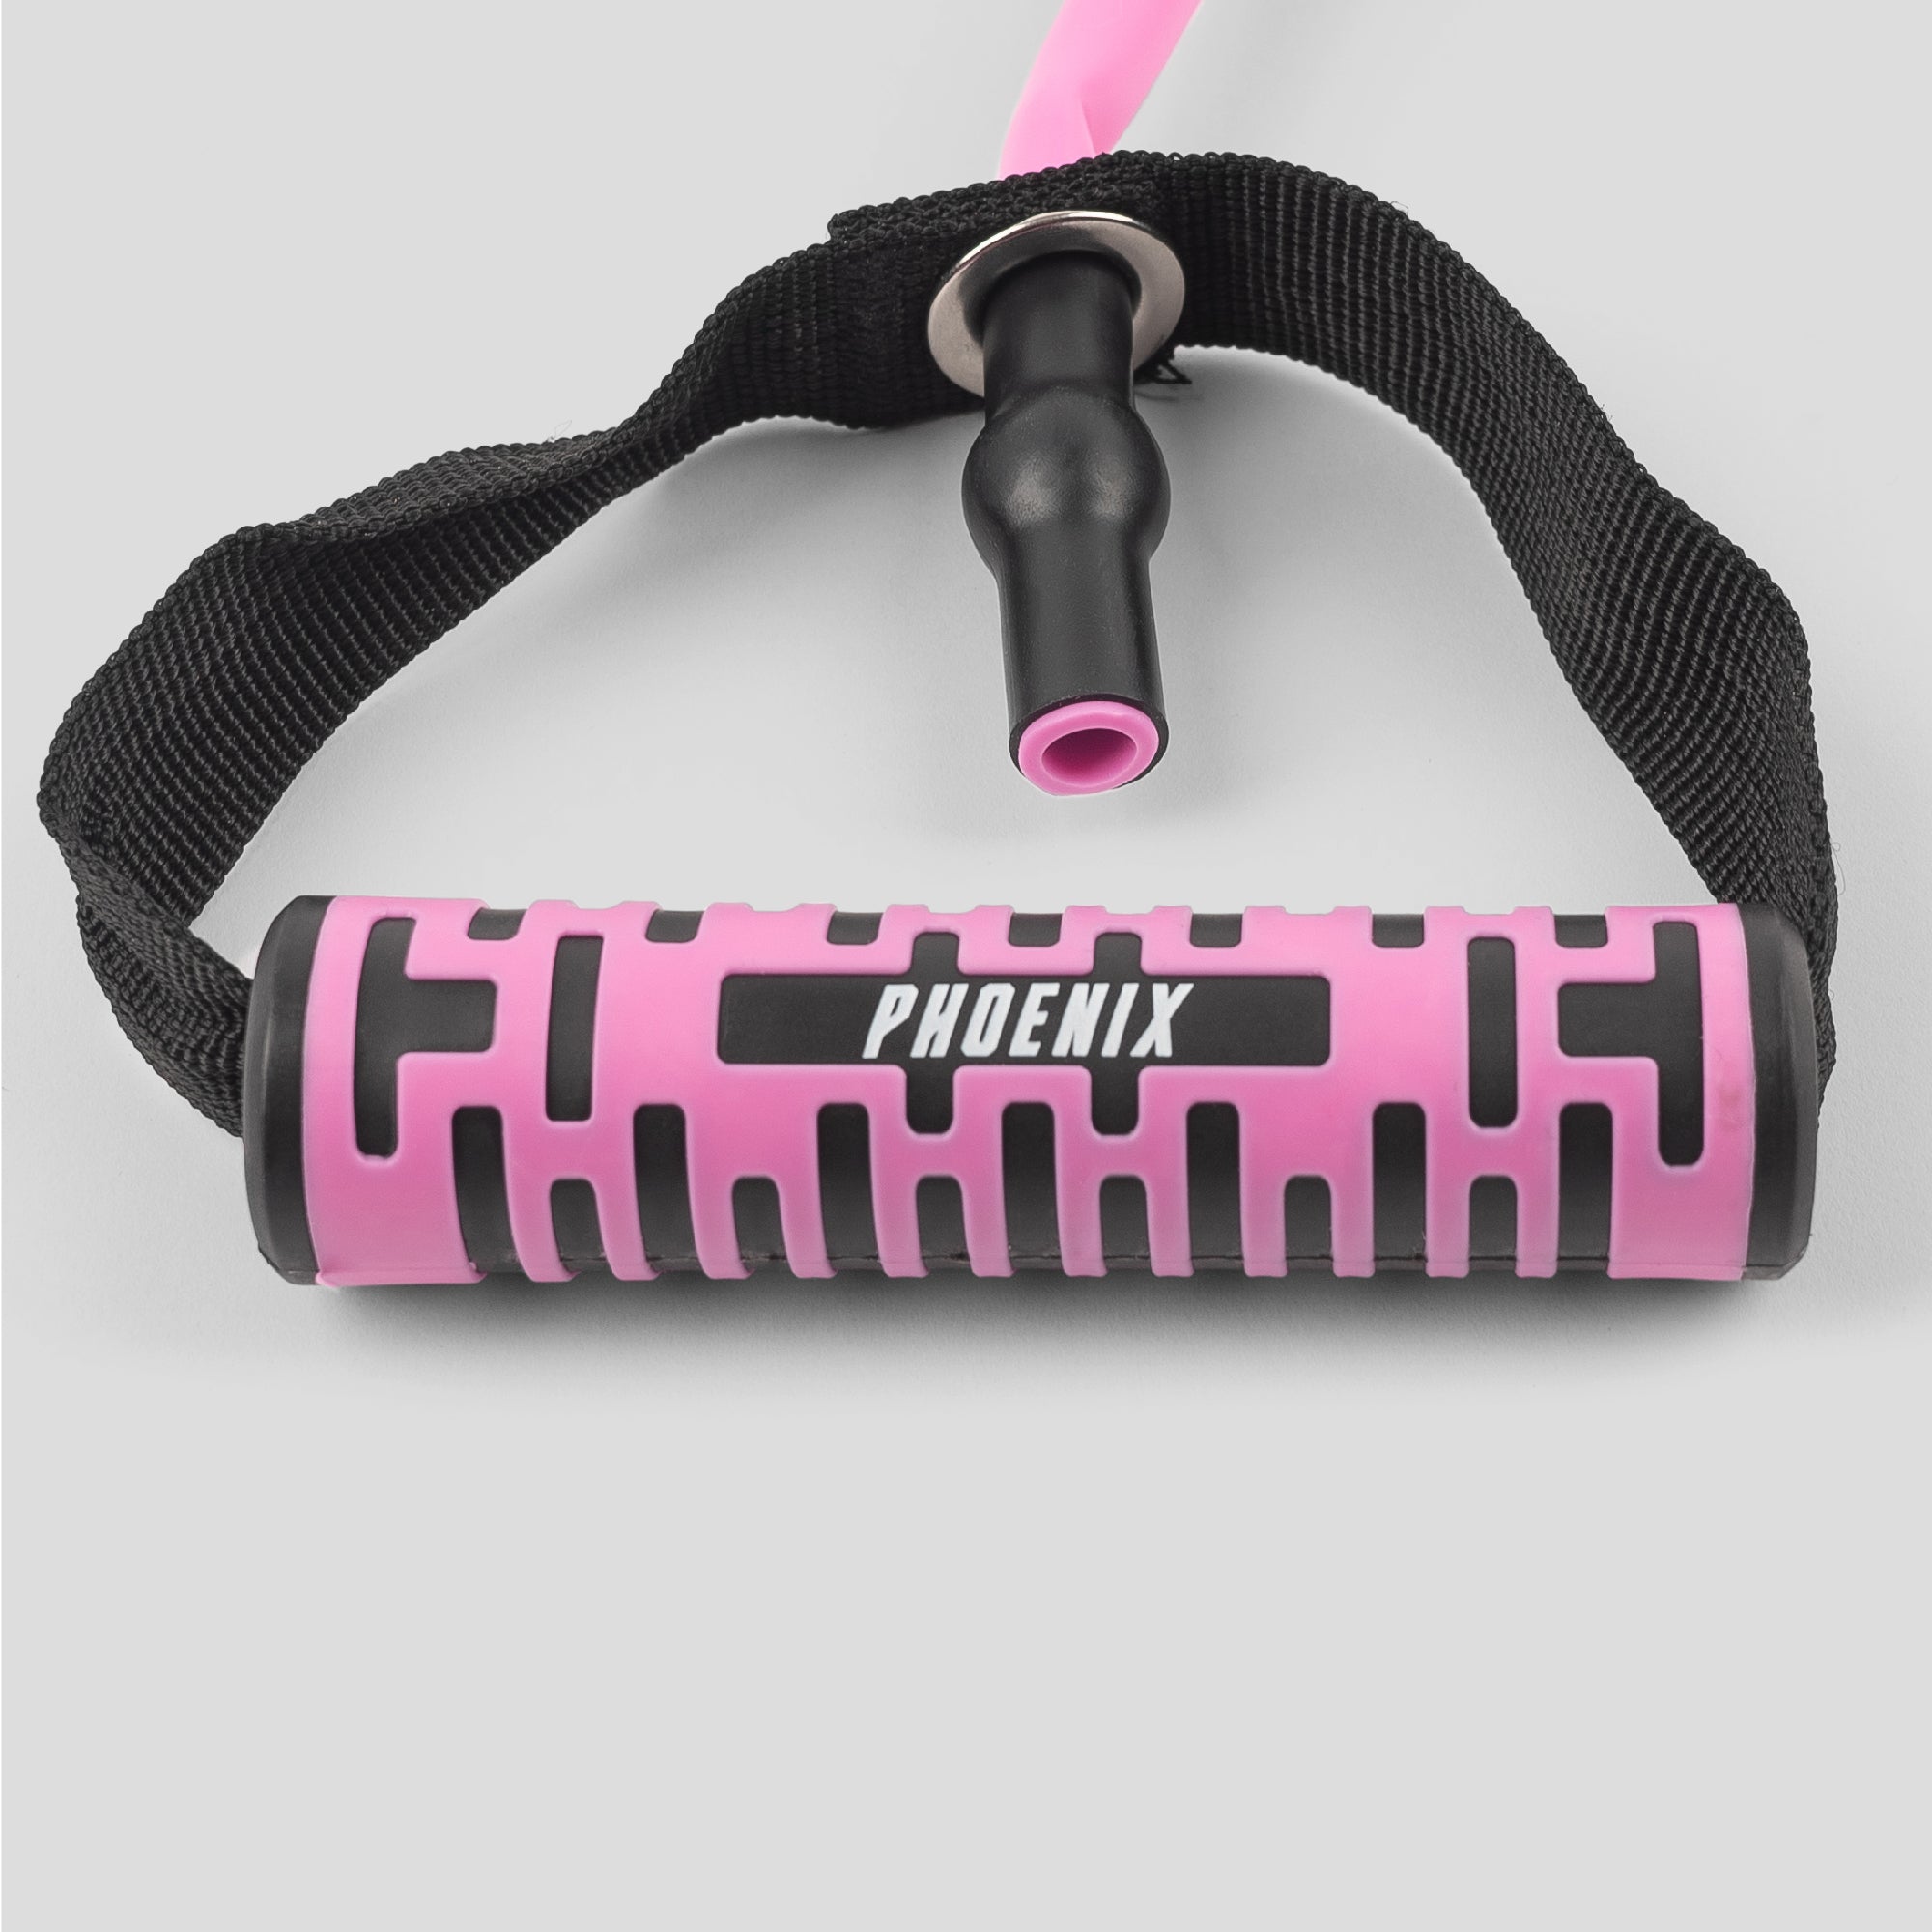 Resistance Tube - Pink